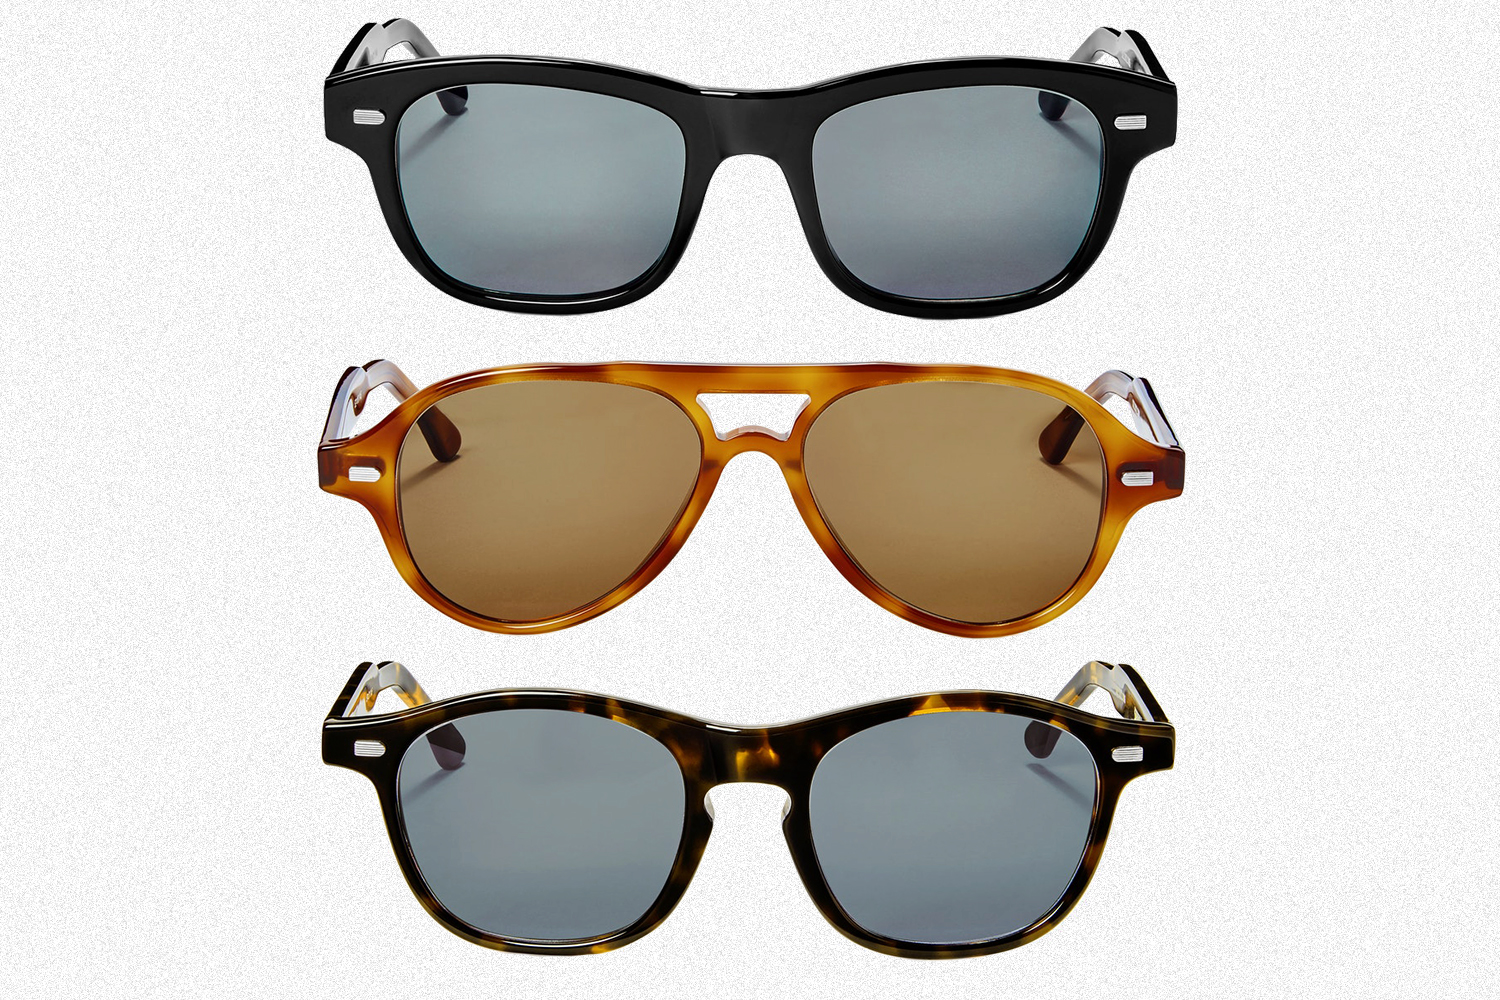 Shinola's first original sunglasses, including the Mackinac, Rambler and Bixby in black, Havana and Dark Havana